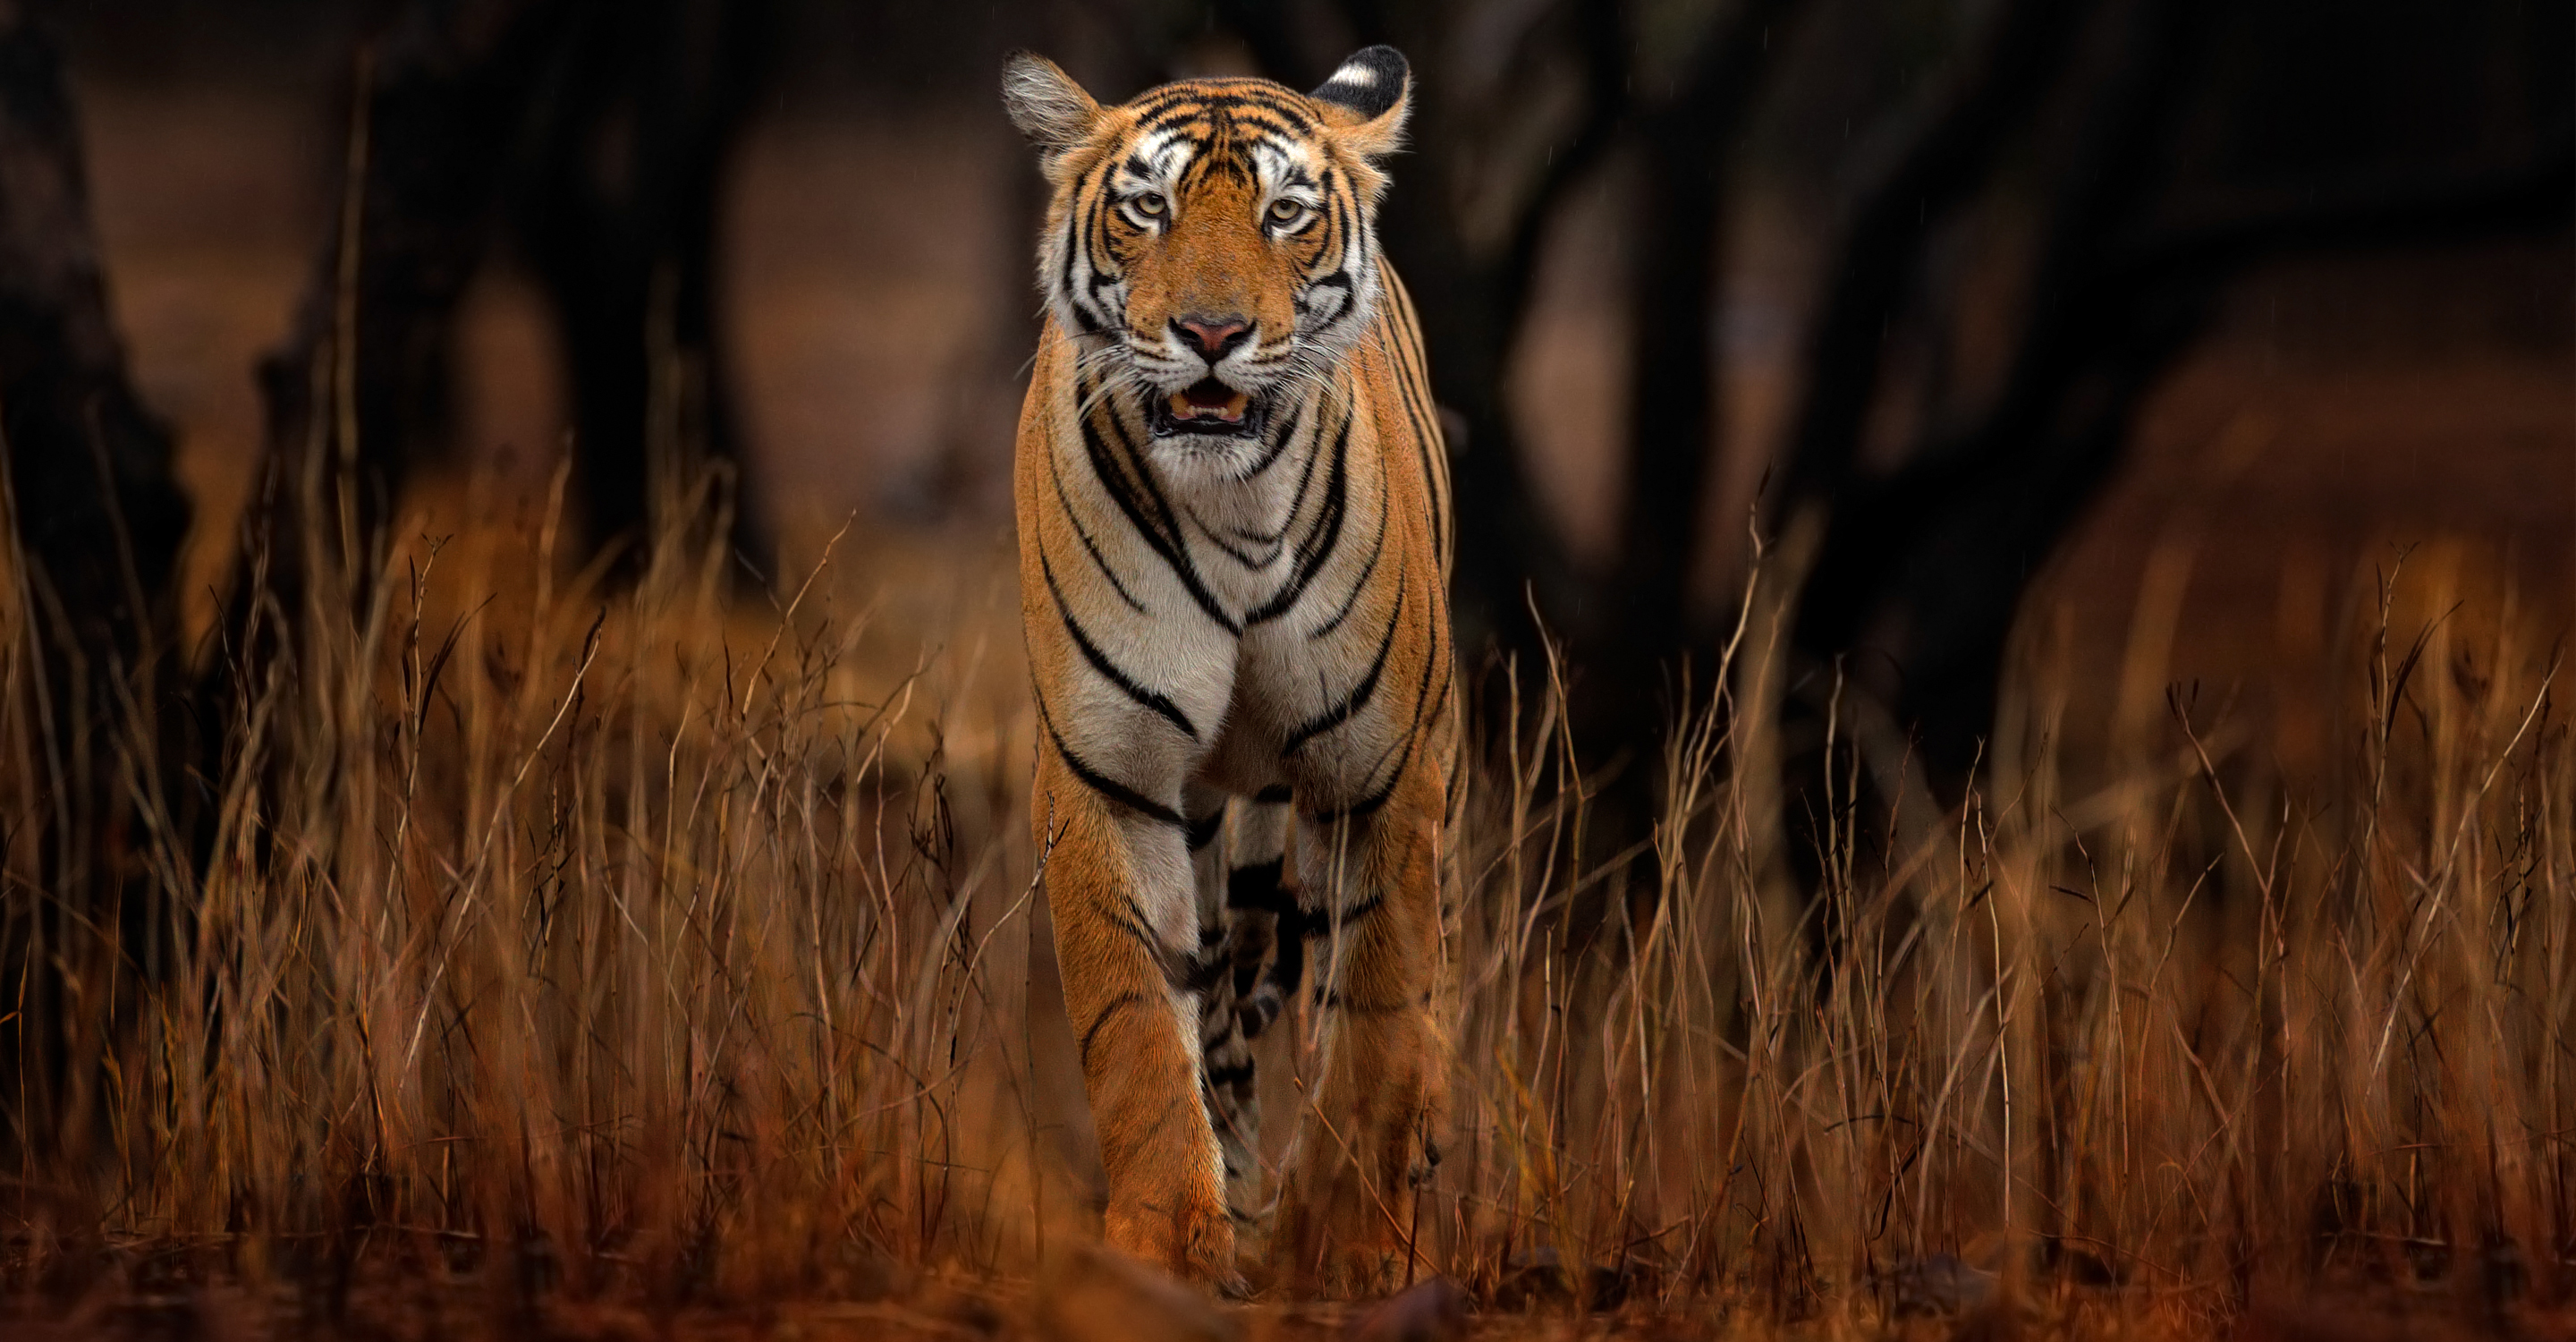 India Tiger Safari: A Photo Pro Expedition